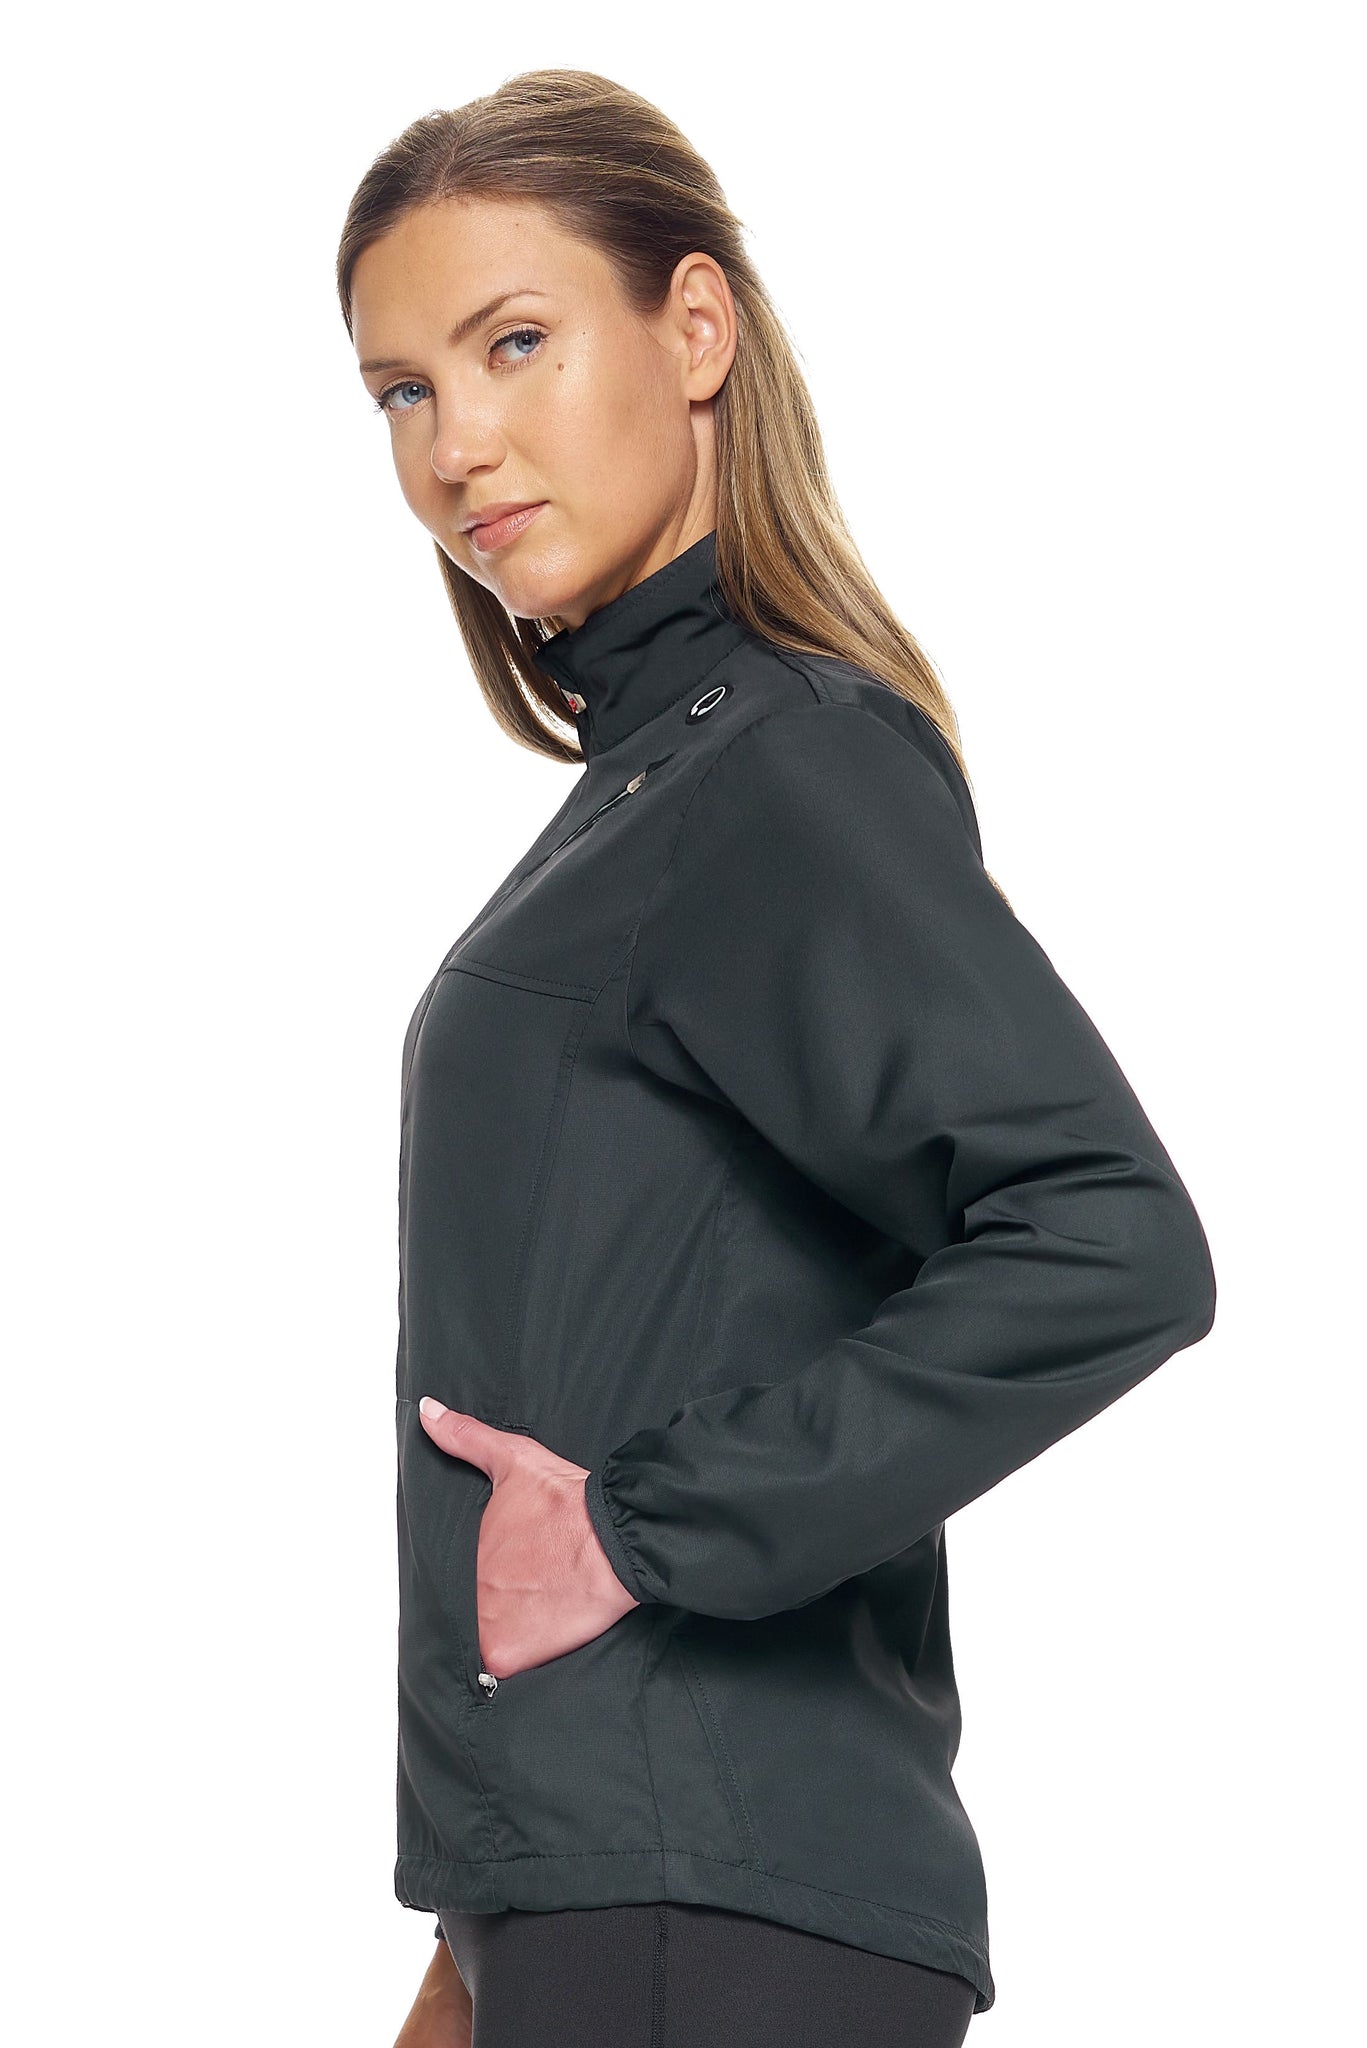 Expert Brand Wholesale Women's Water Resistant Run Away Jacket in black image 3#black